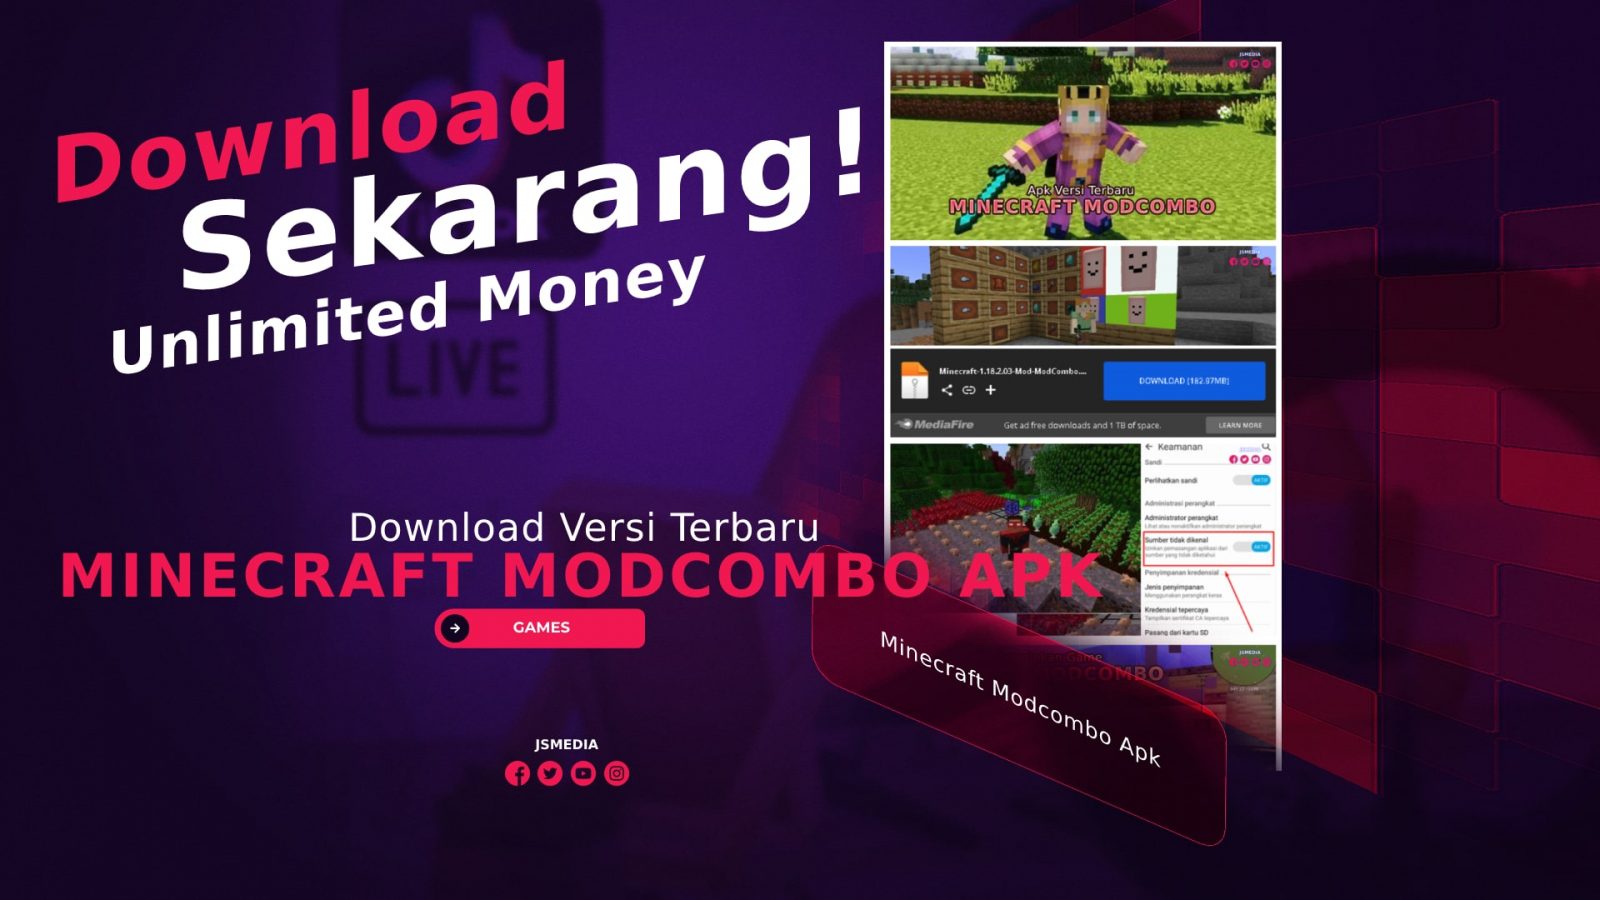 Modcombo apk minecraft Minecraft Mod